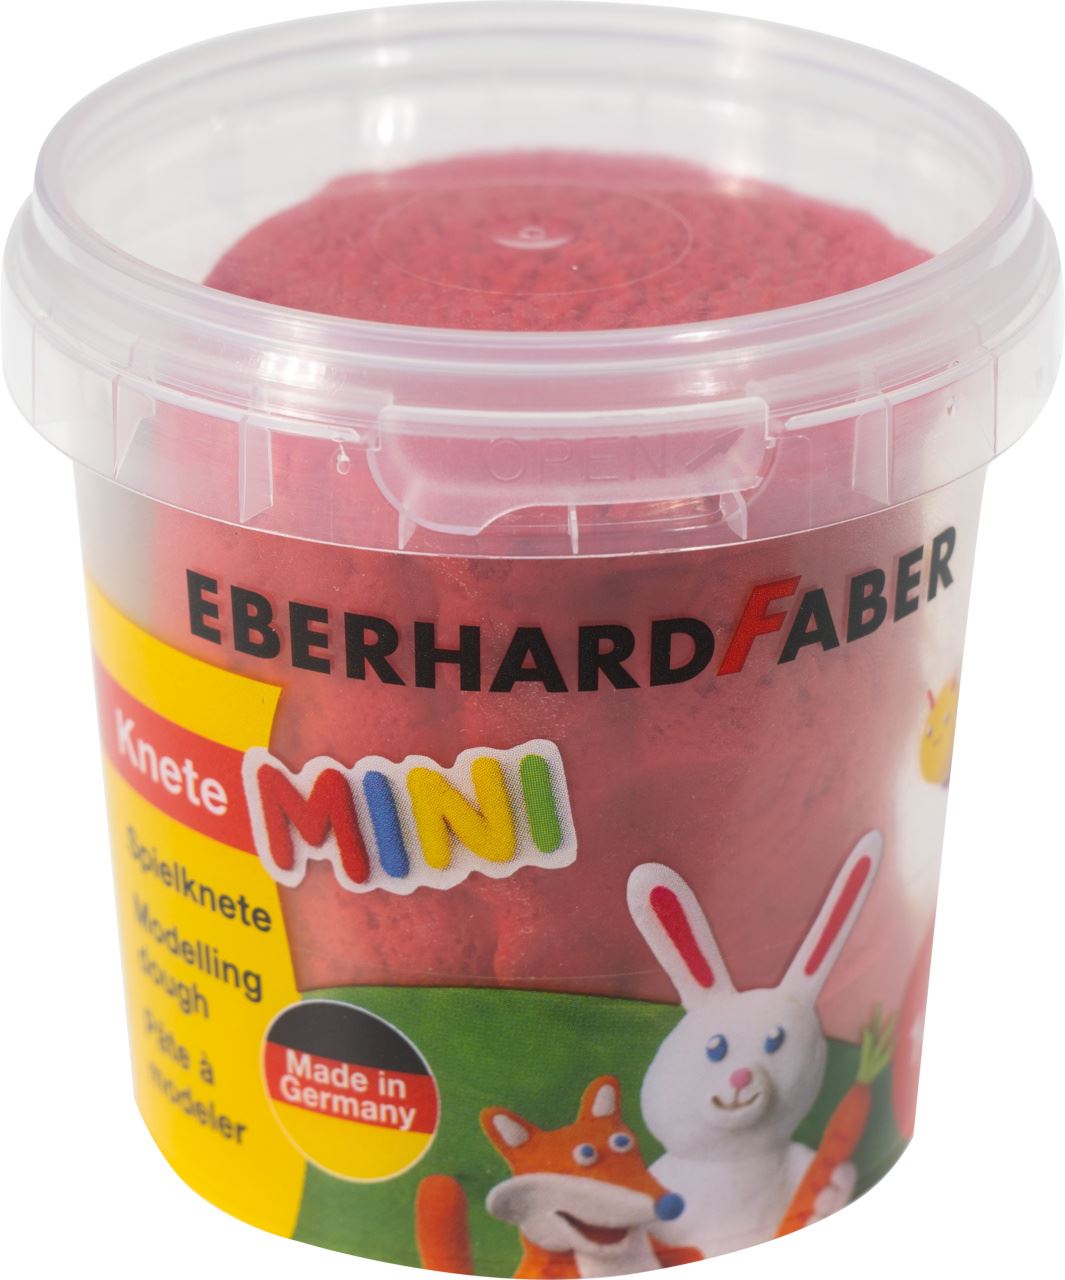 Eberhard-Faber - Mini Kids modelling dough basic colours set of 4